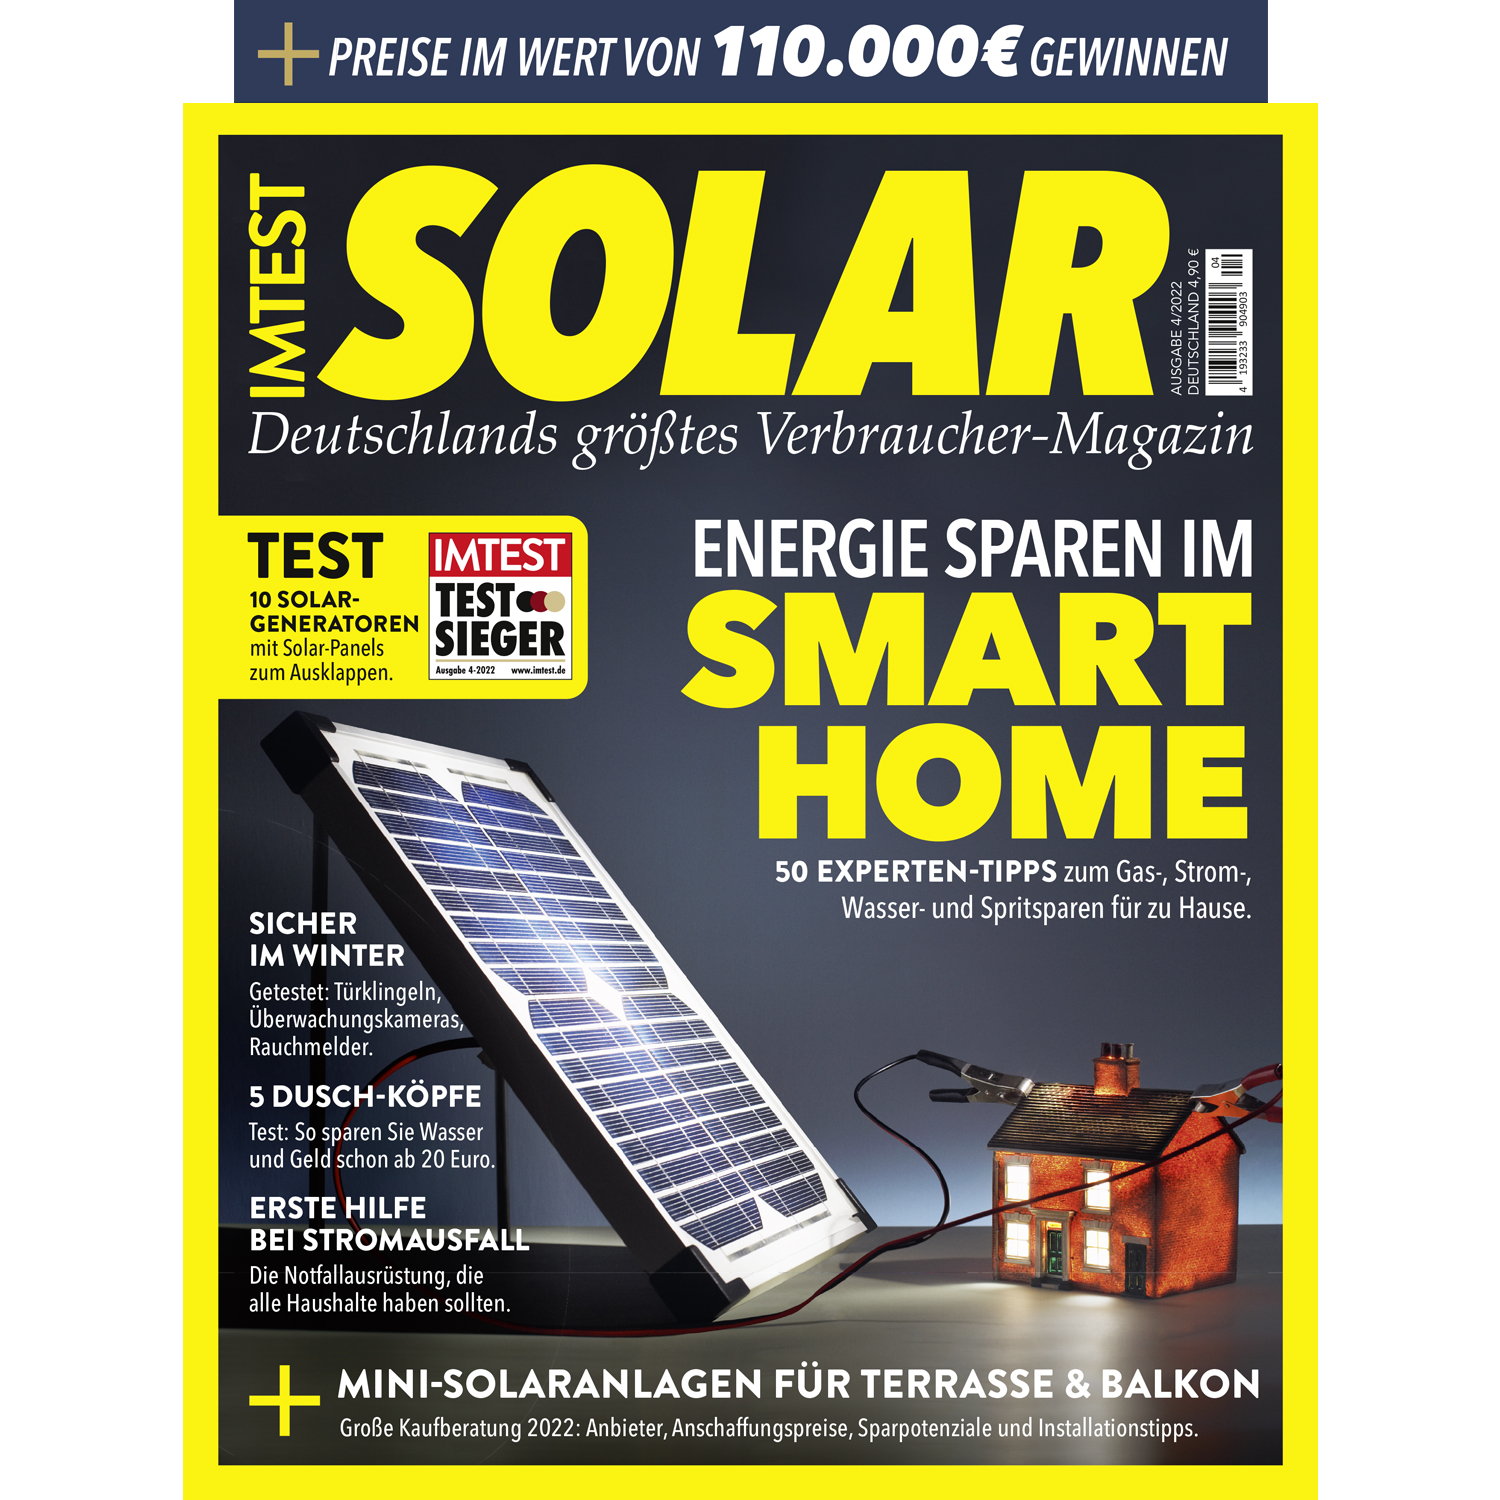 IMTEST - Solar - Verbrauchermagazin 04/2022